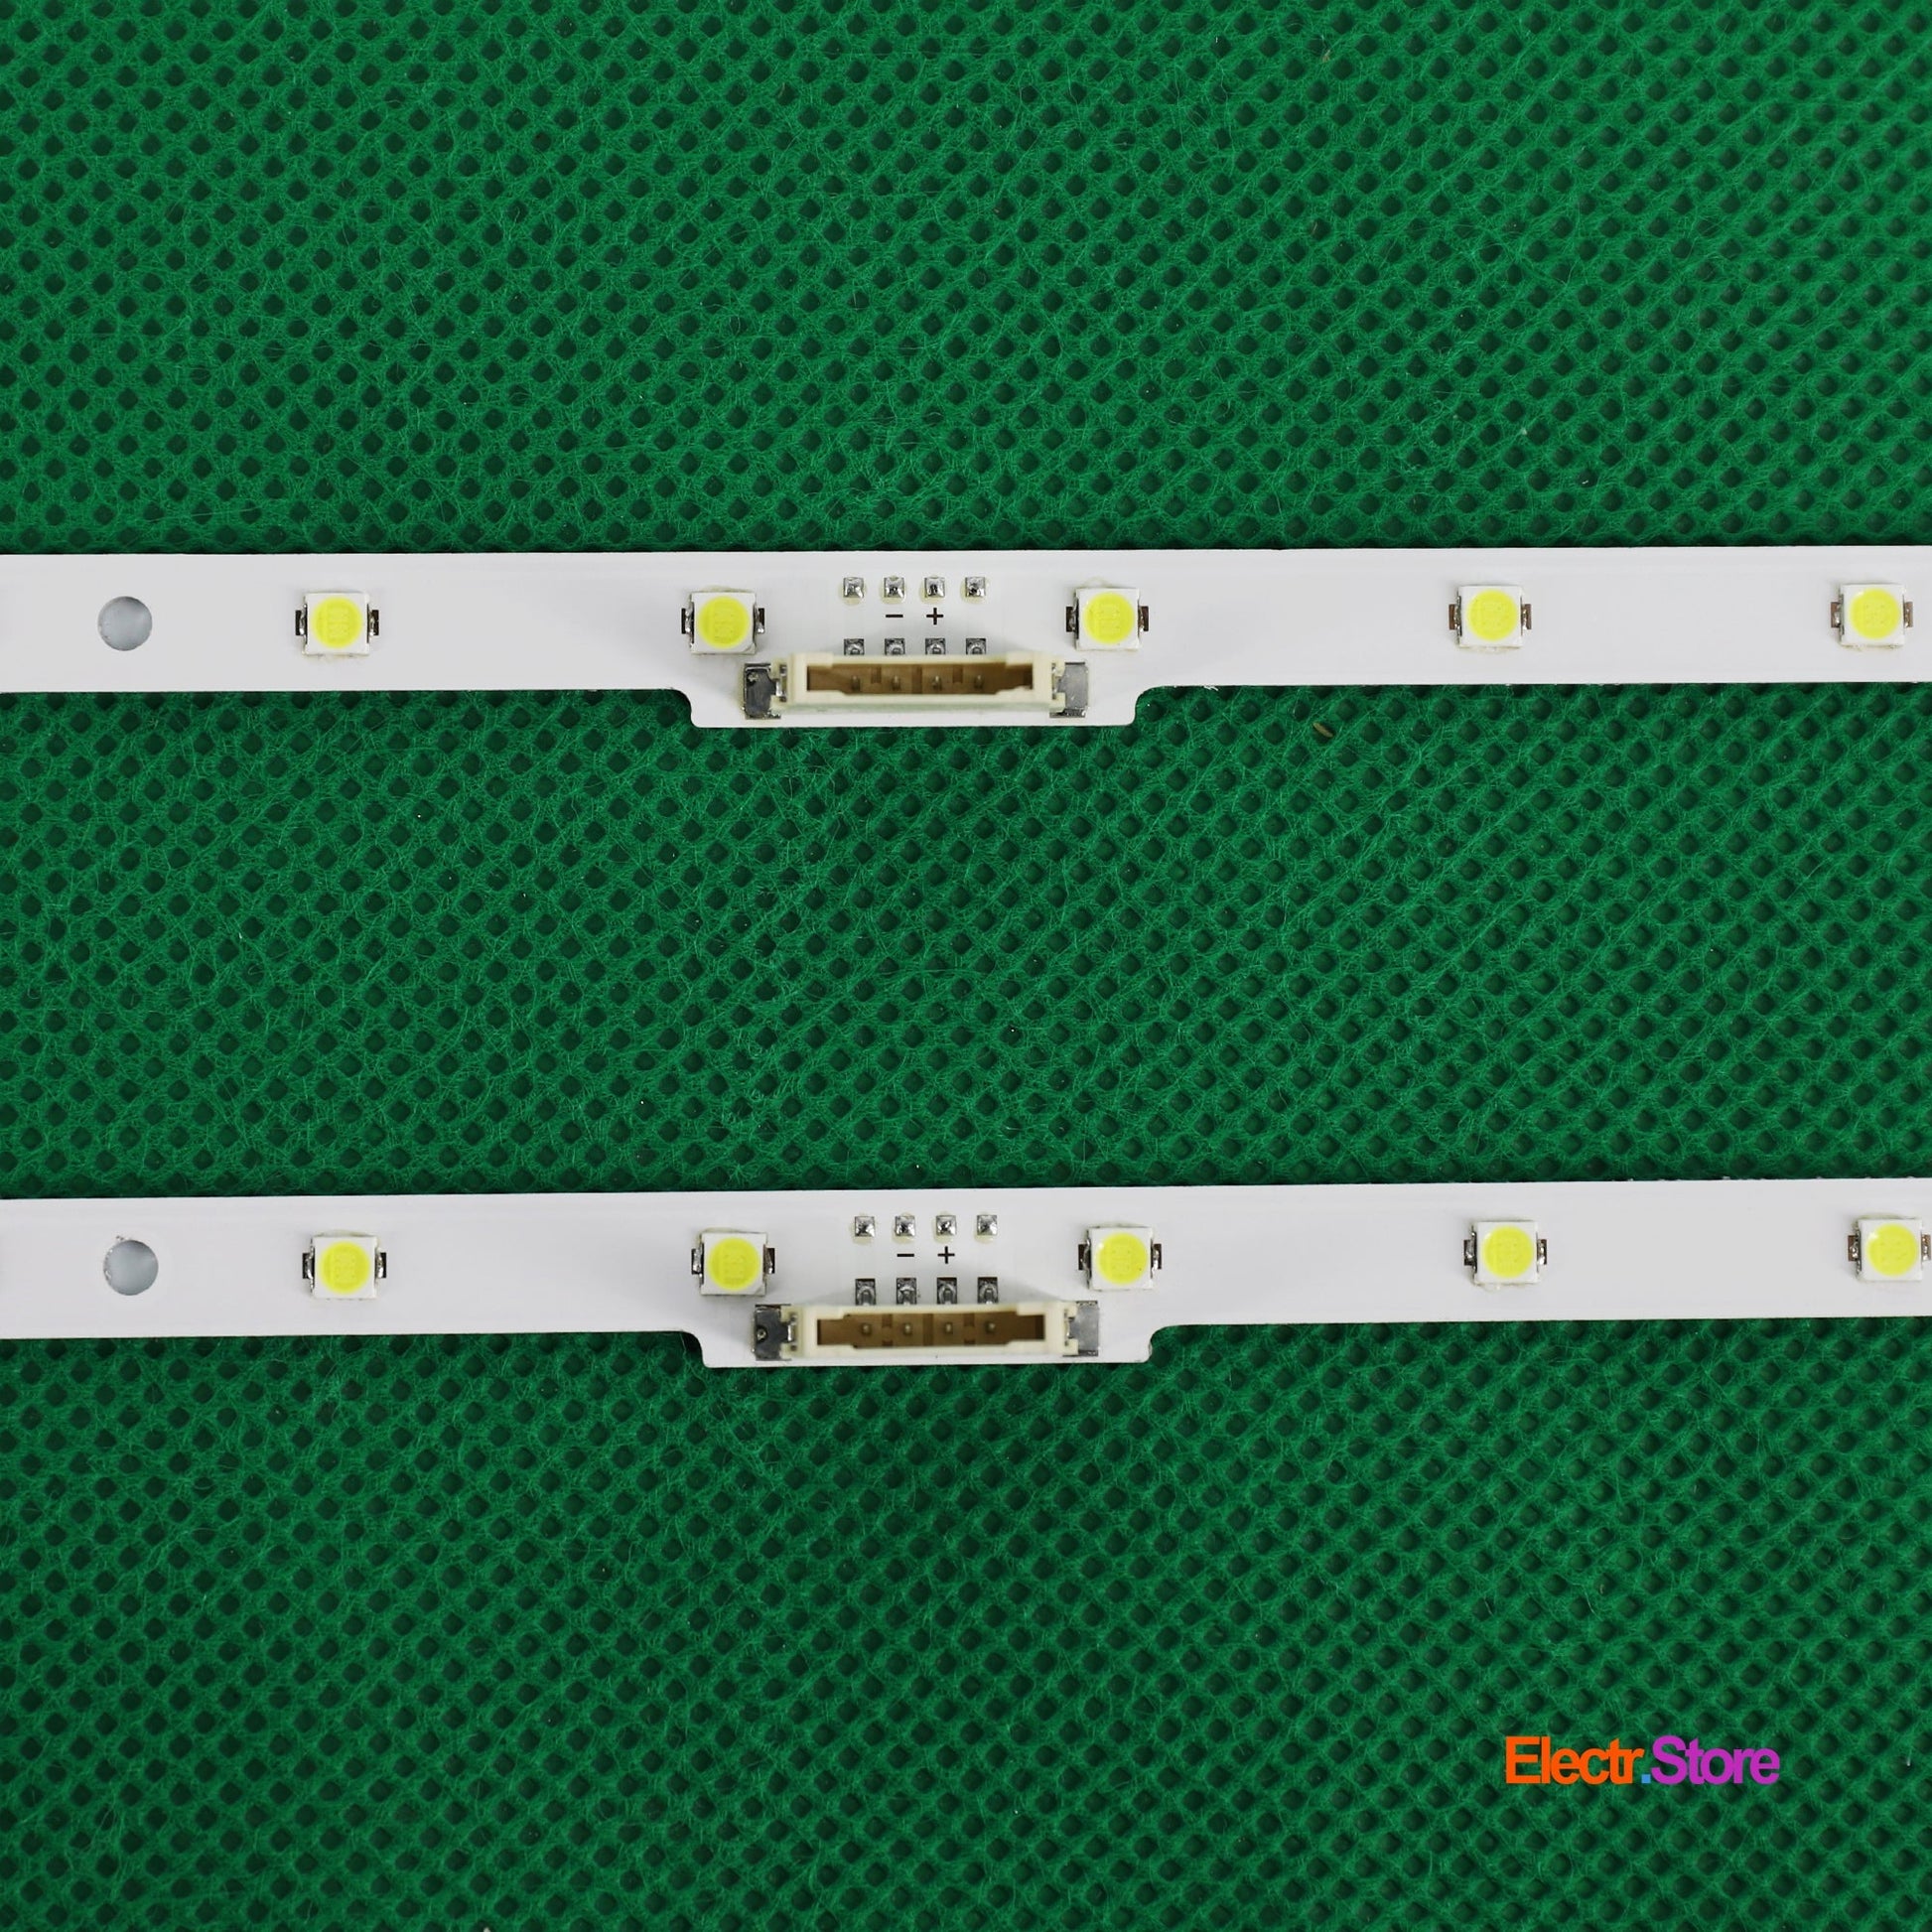 LED Backlight Strip Kits, AOT_40_NU7100F, LM41-00550A, LM41-00549A, BN96-45955A, 2X23LED (2 pcs/kit), for TV 40" SAMSUNG: UE40NU7100UXCE, UE40NU7100UXRU, UE40NU7100UXUA, UE40NU7110KXXU 40" LED Backlights LM41-00550A Samsung Electr.Store